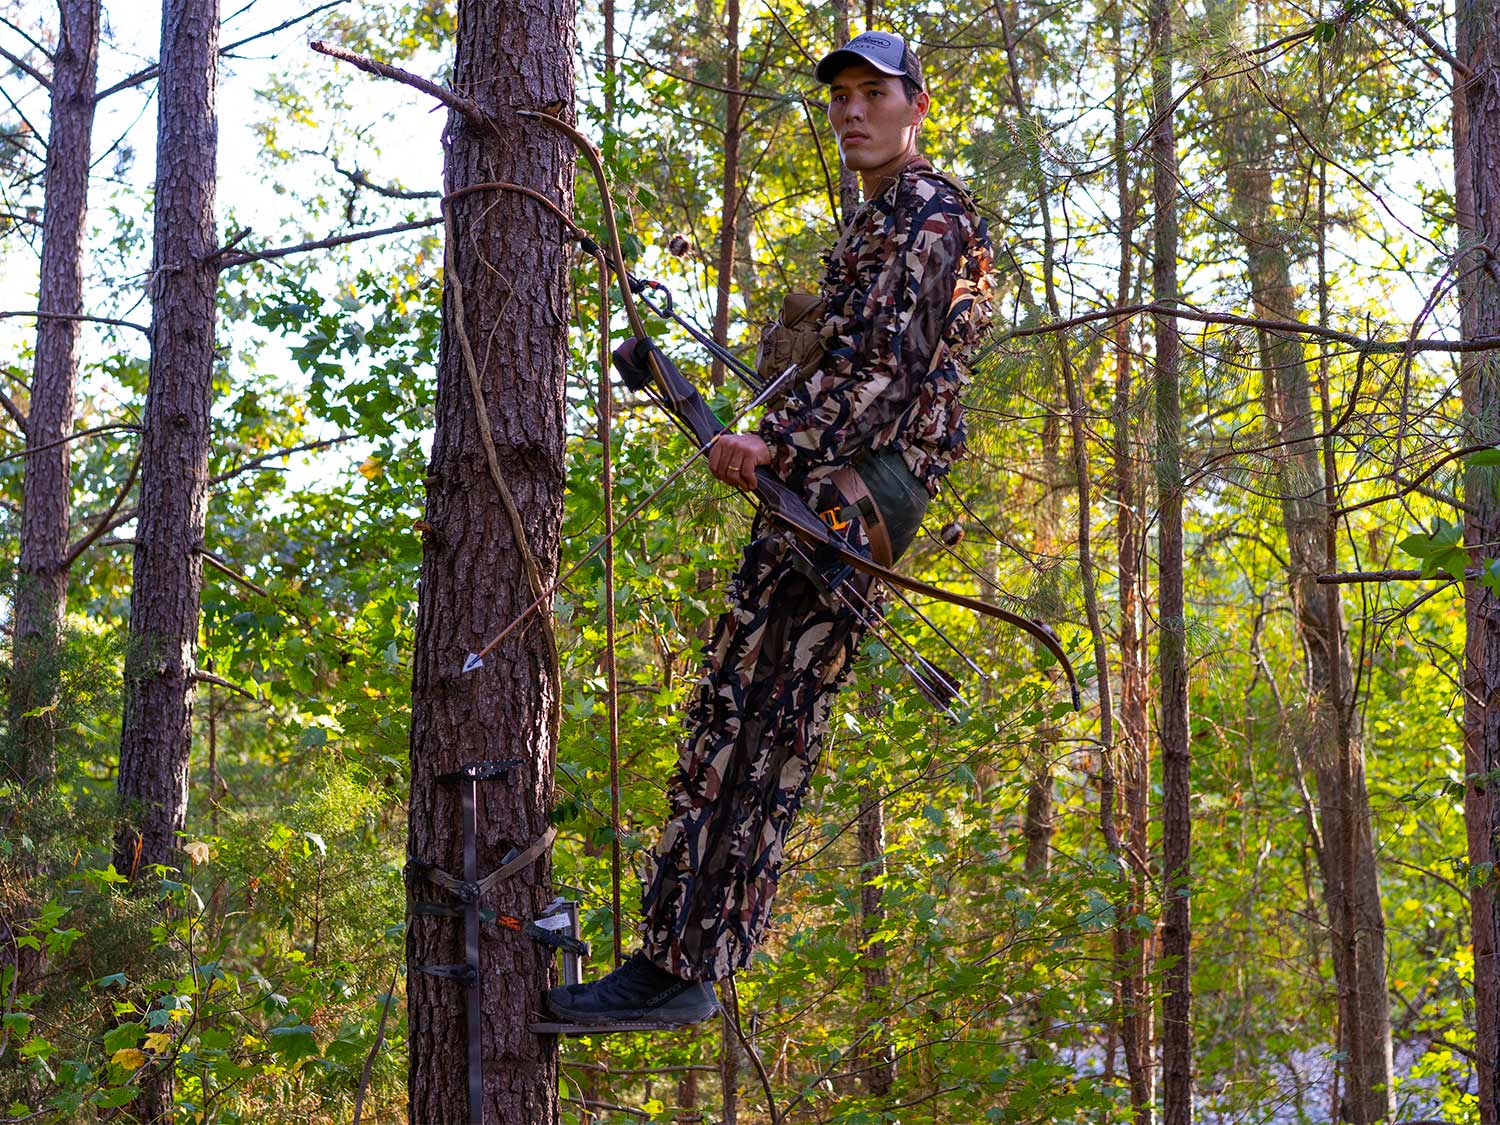 hunter standing in a tree saddle platform